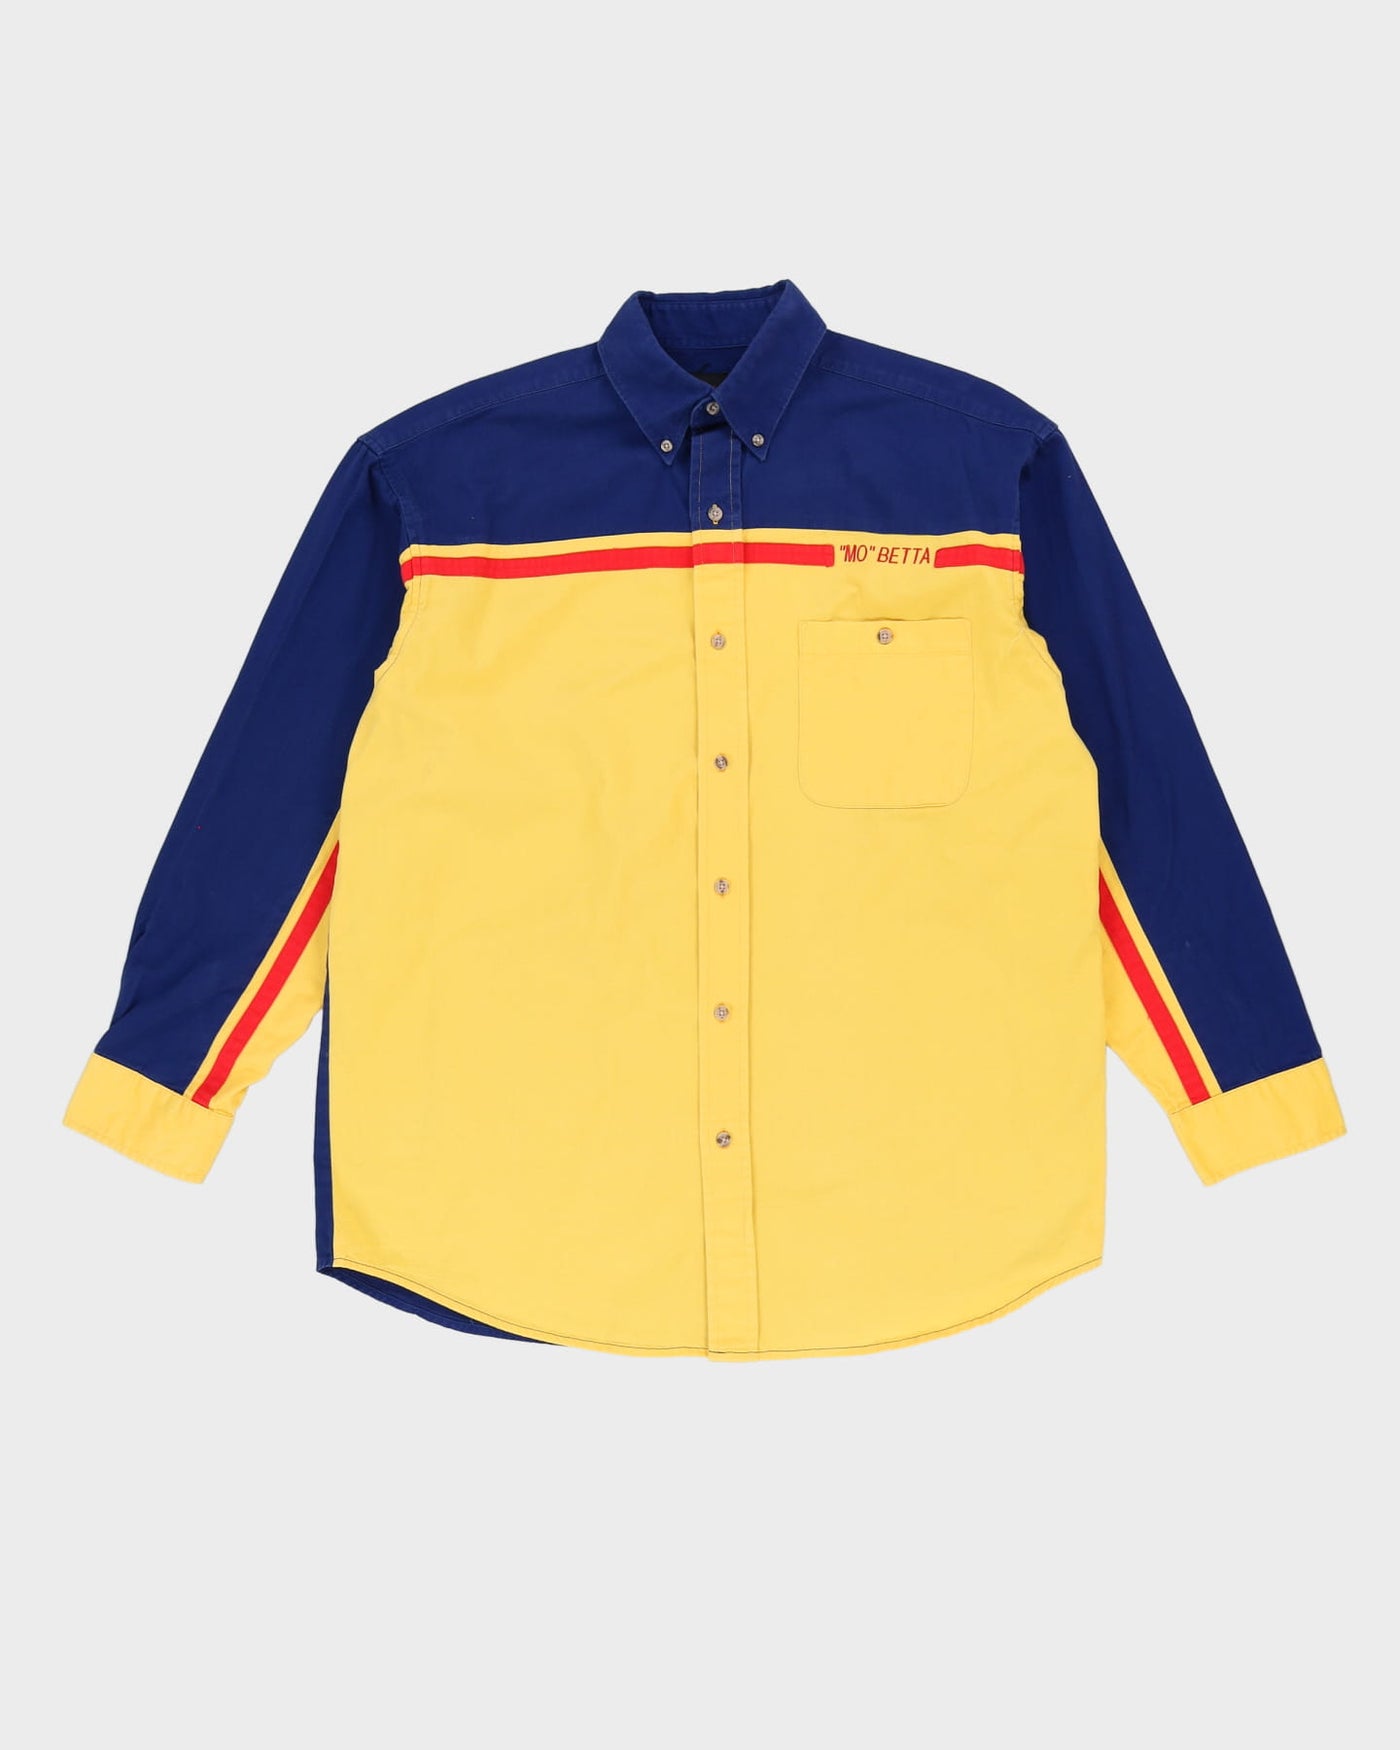 Vintage 90s "MO" BETTA Yellow / Blue Shirt - M/L